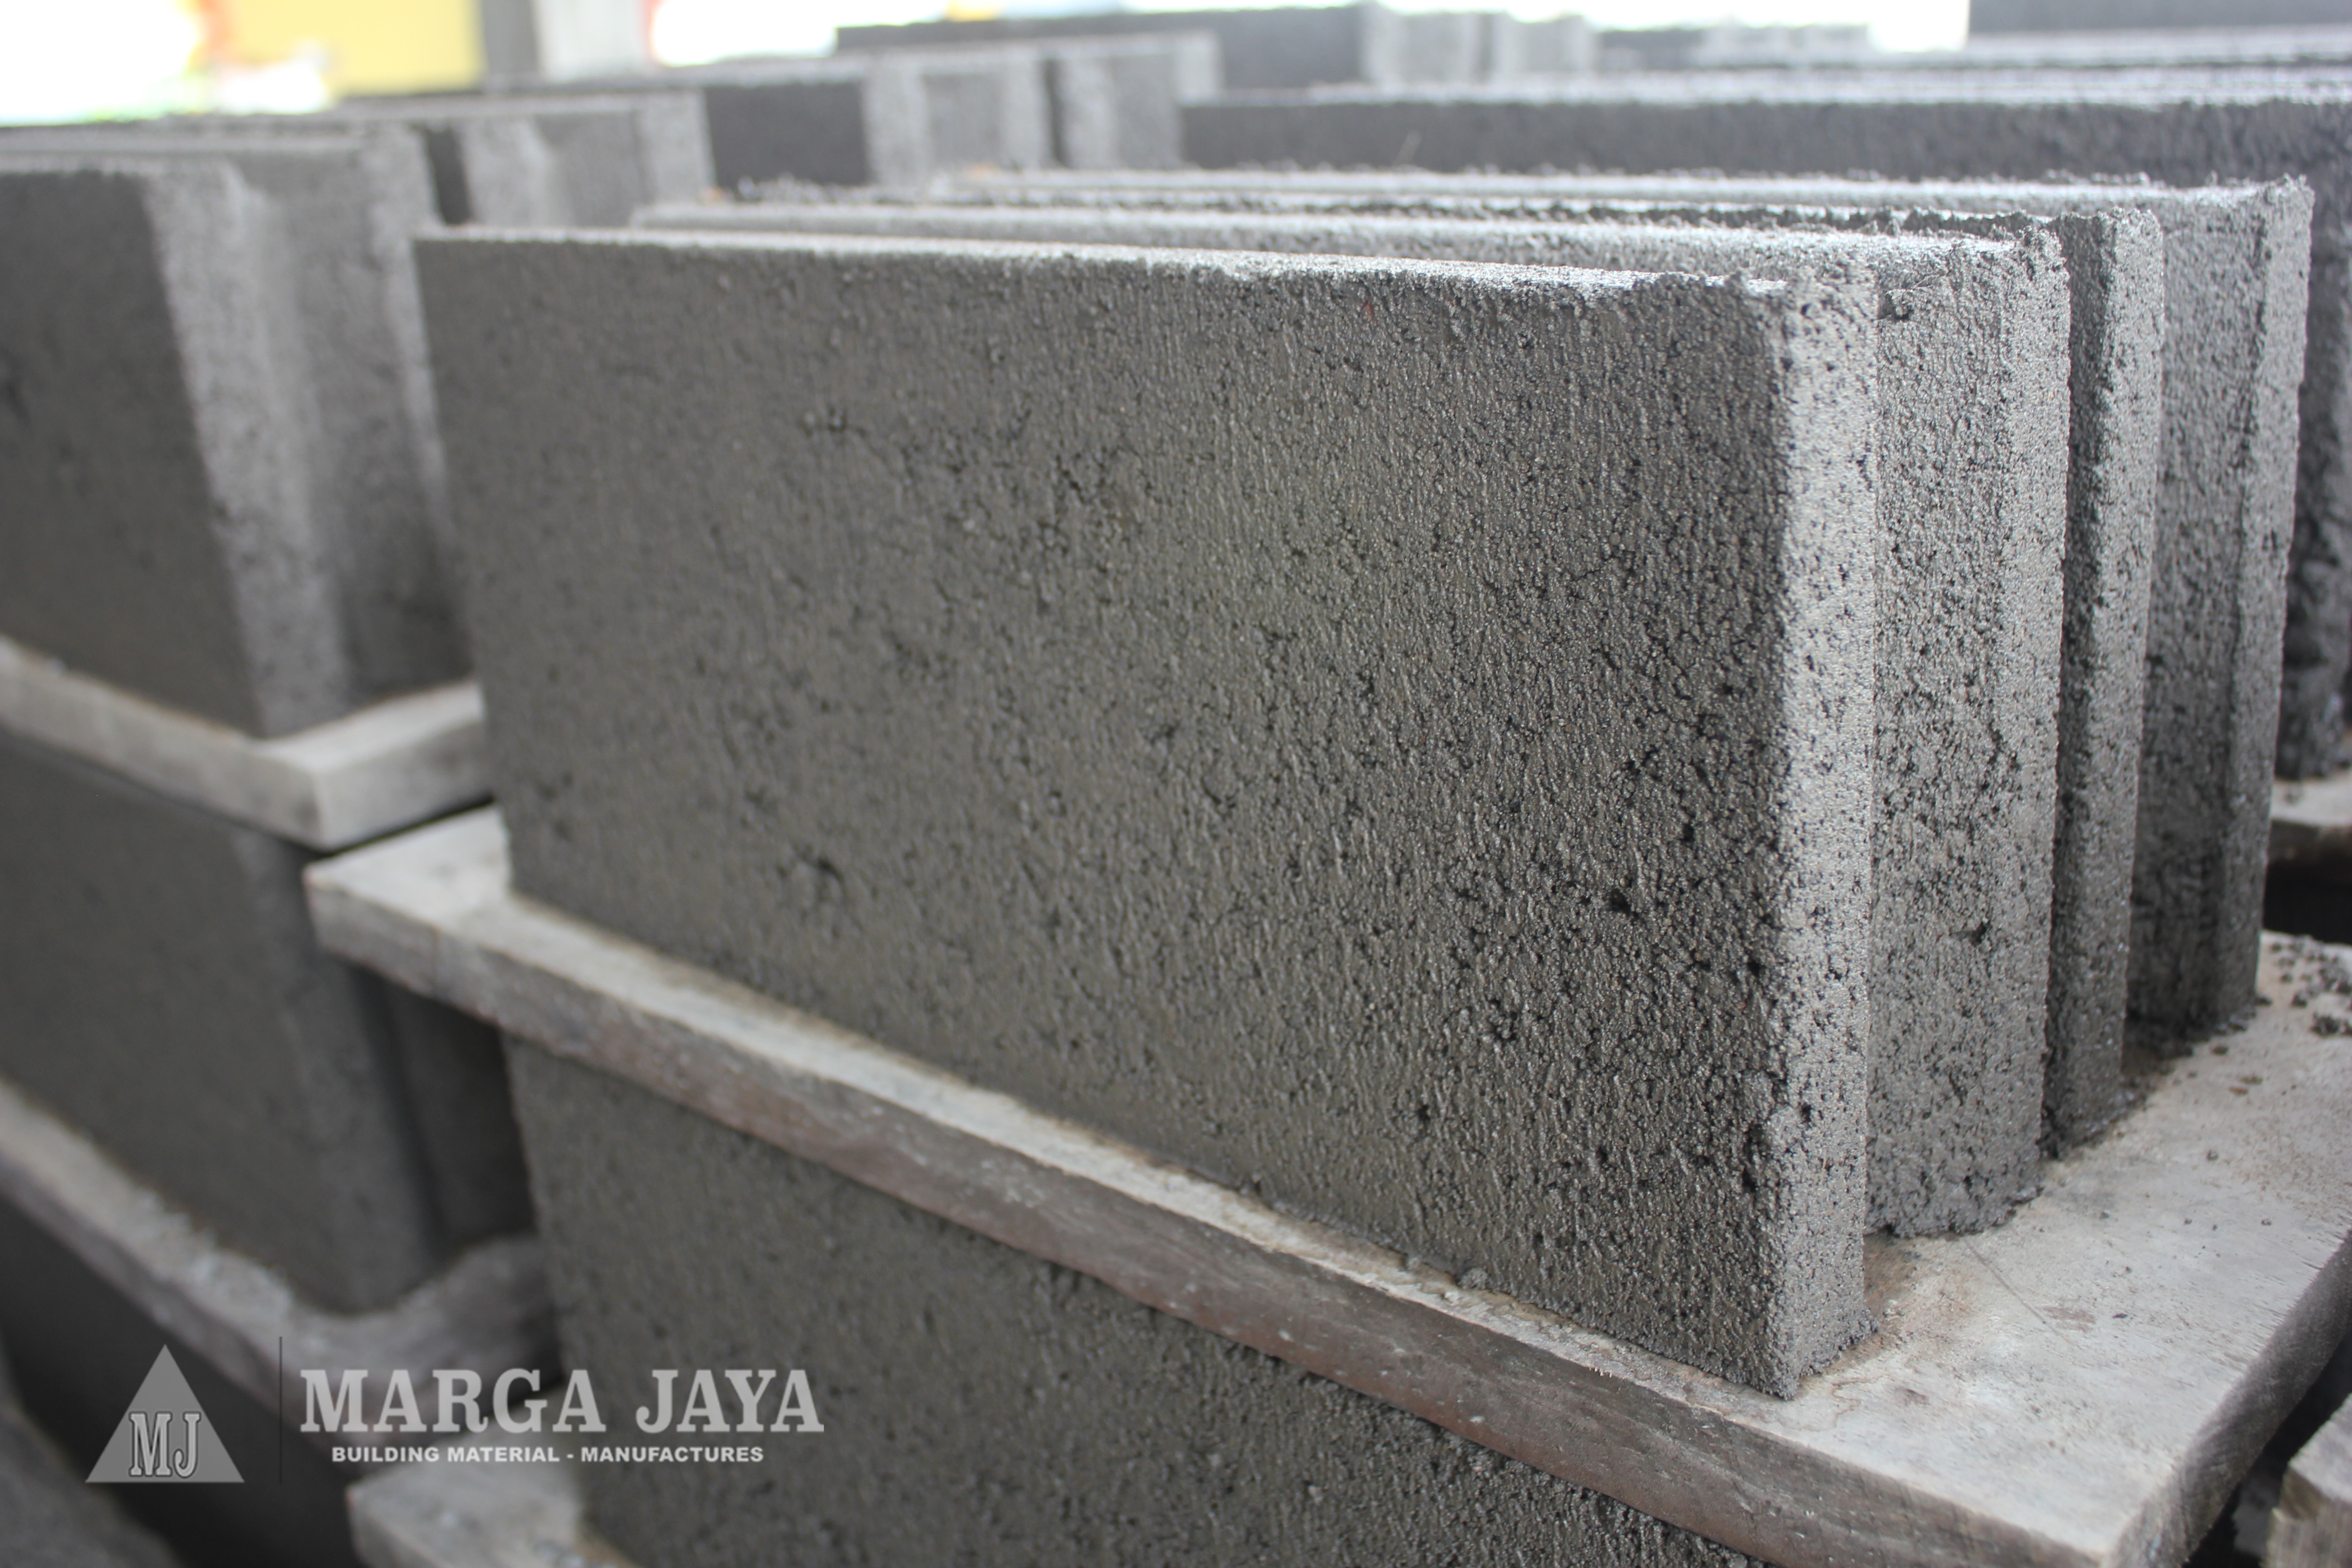 Batako Press  Marga Jaya - Building Material Manufactures 